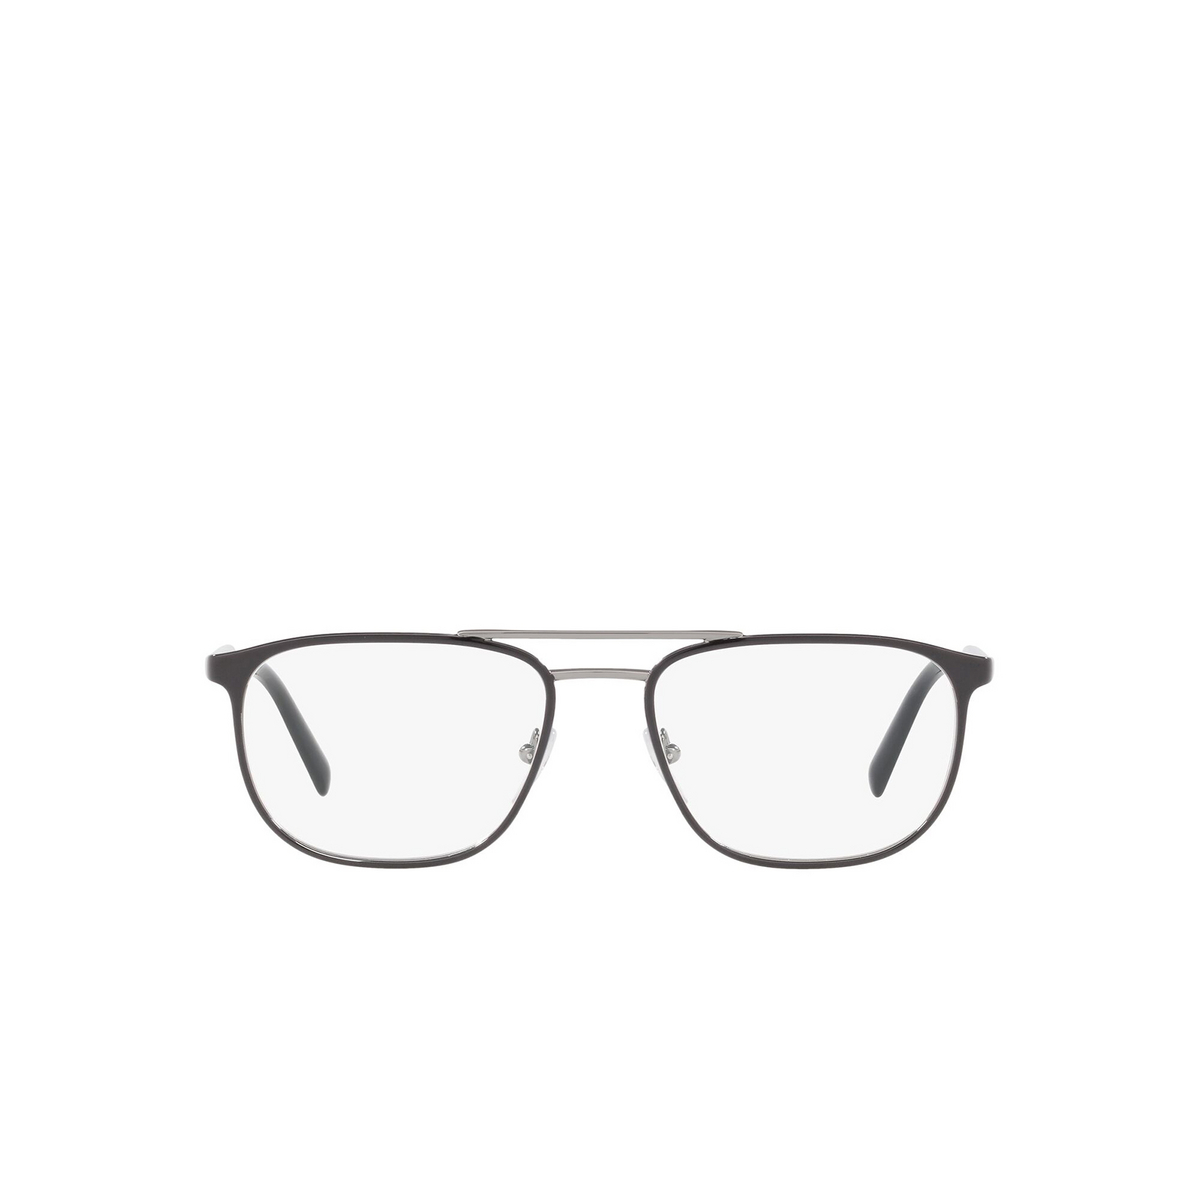 Prada PR 54XV Eyeglasses YDC1O1 Top Black on Gunmetal - front view